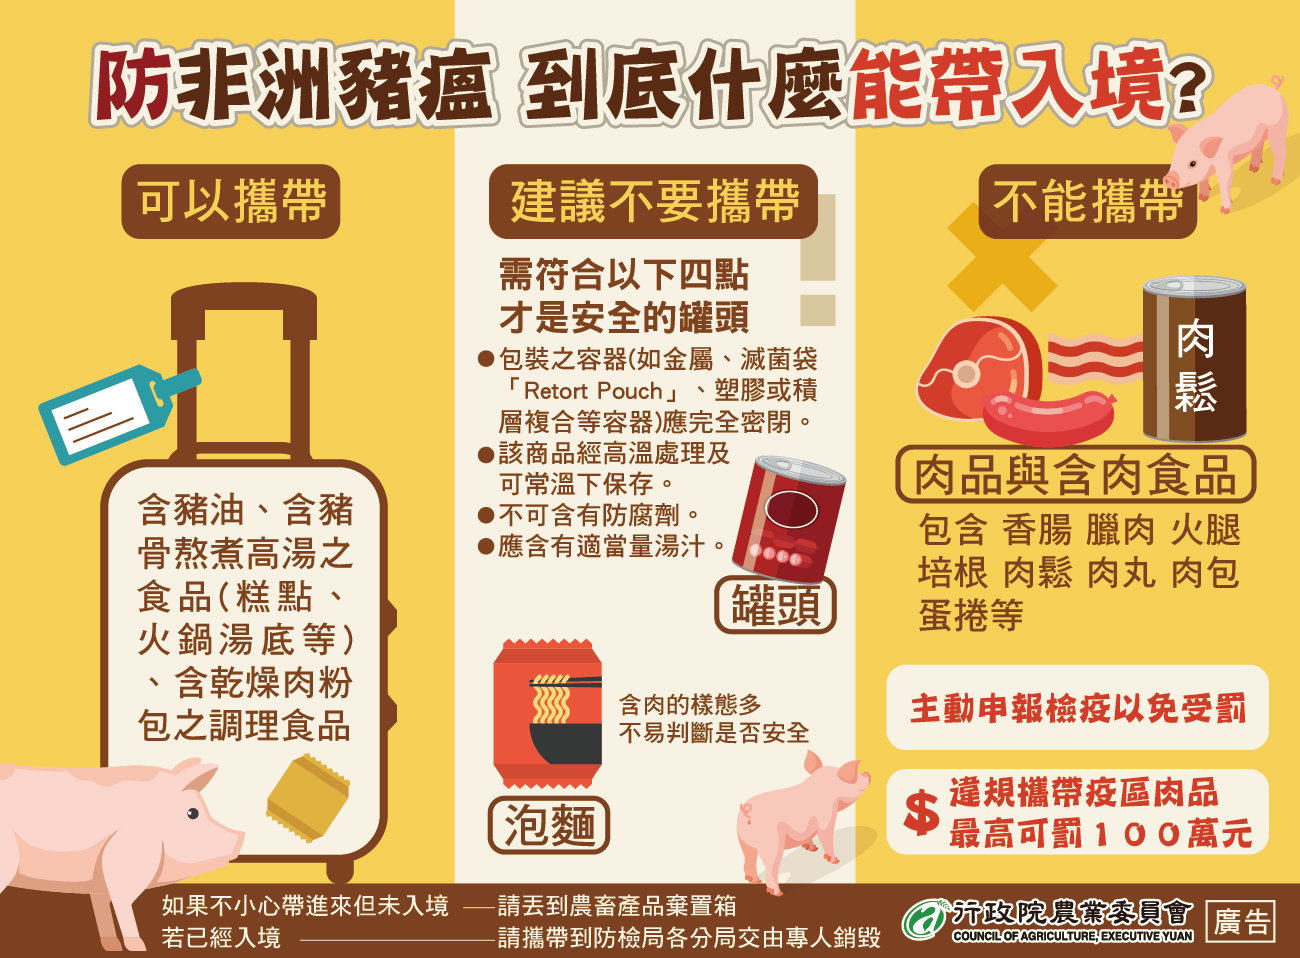 Pencegahan Taiwan dari invasi demam babi Afrika. Sumber foto: Council of Agriculture